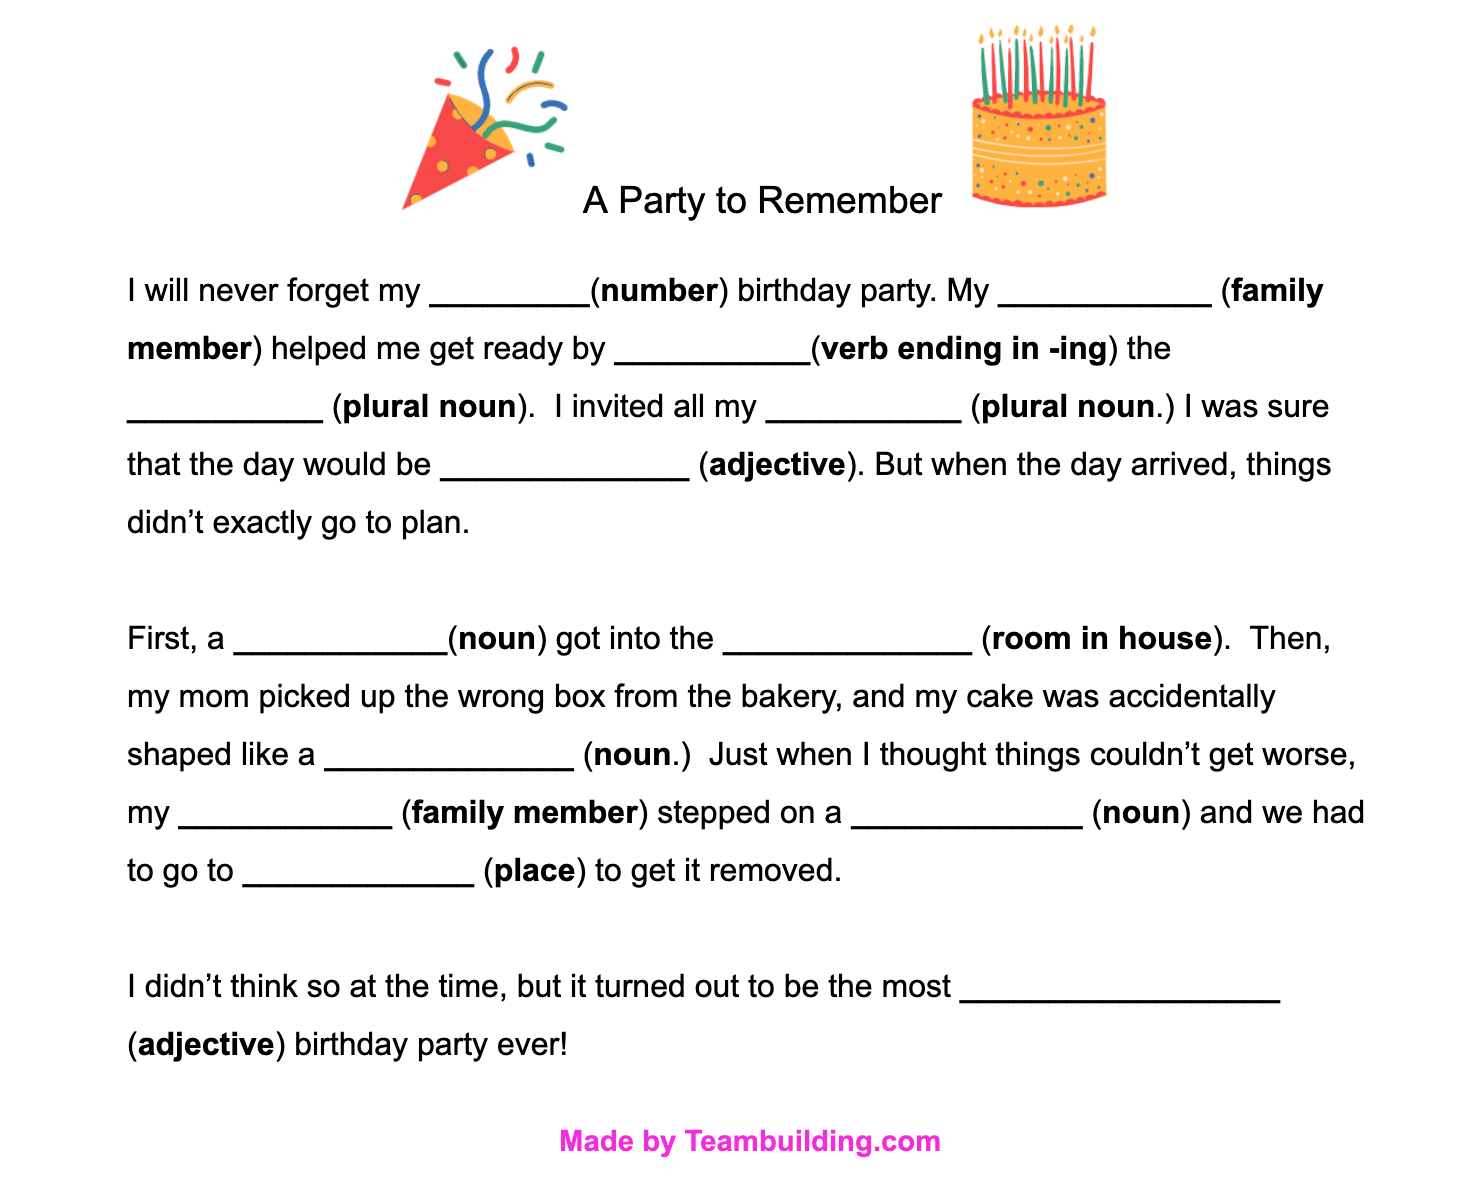 Virtual birthday celebration planning tips